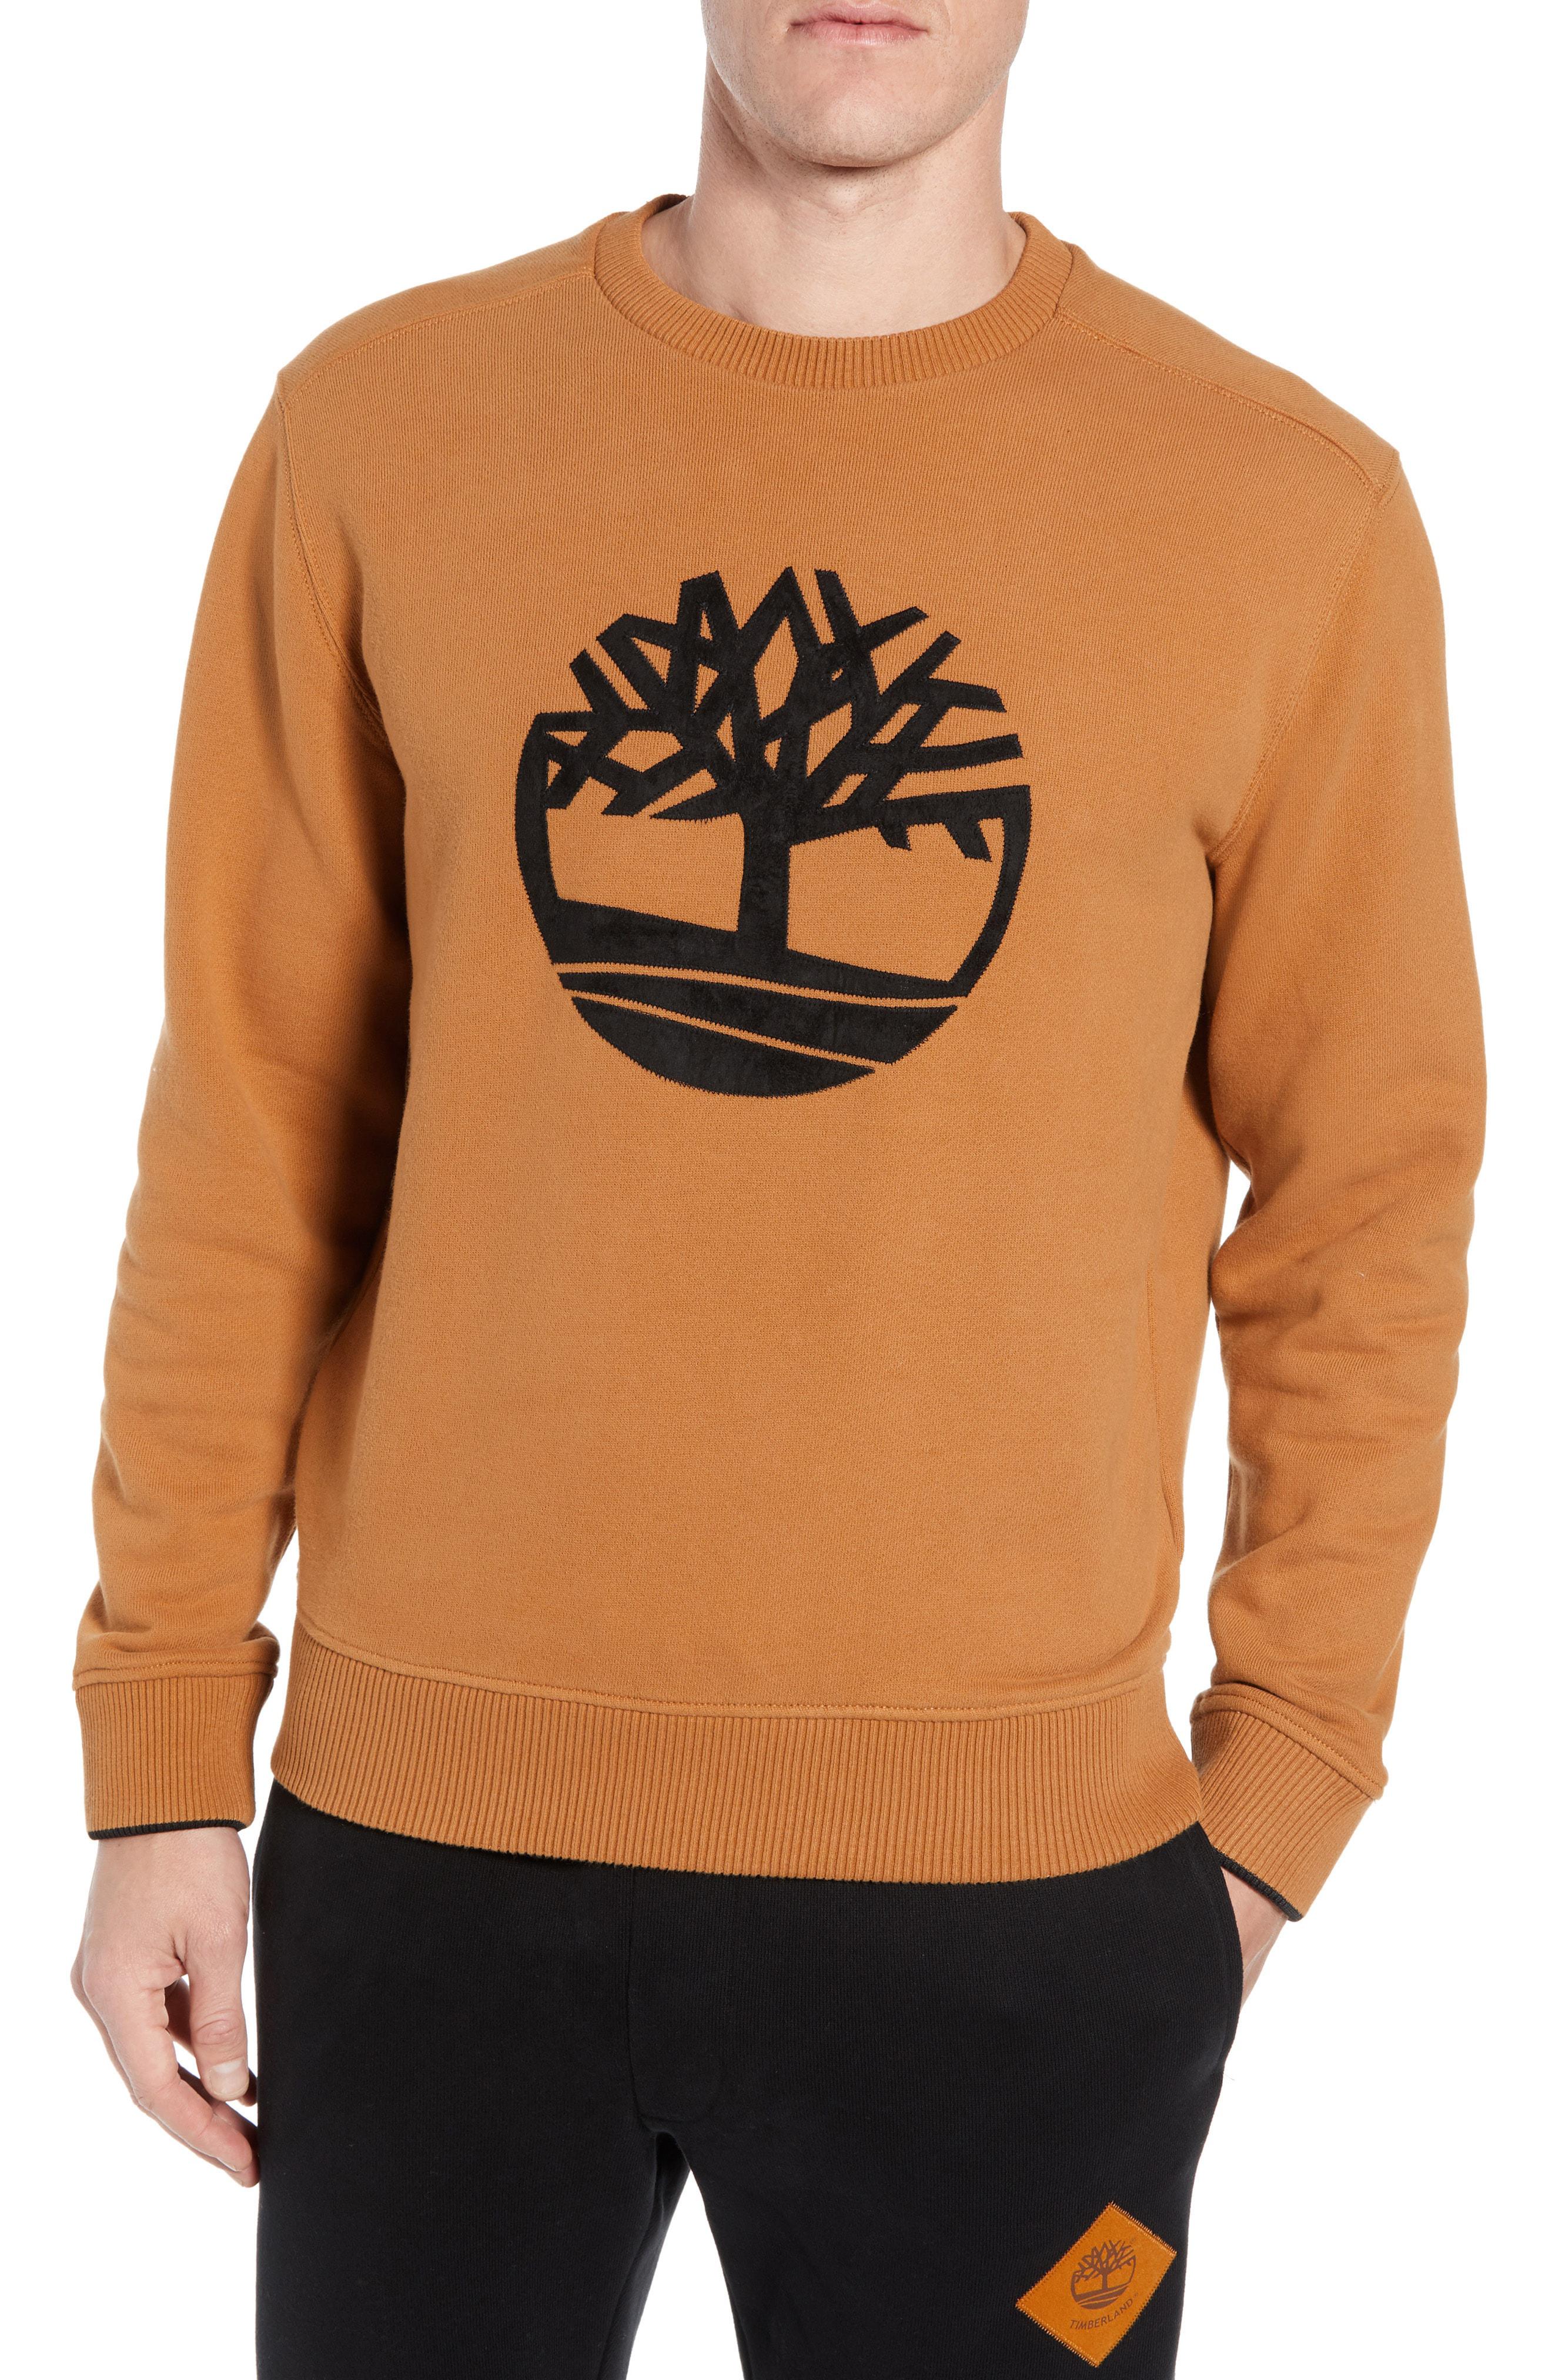 Lyst - Timberland Elevated Logo Crewneck Sweatshirt for Men